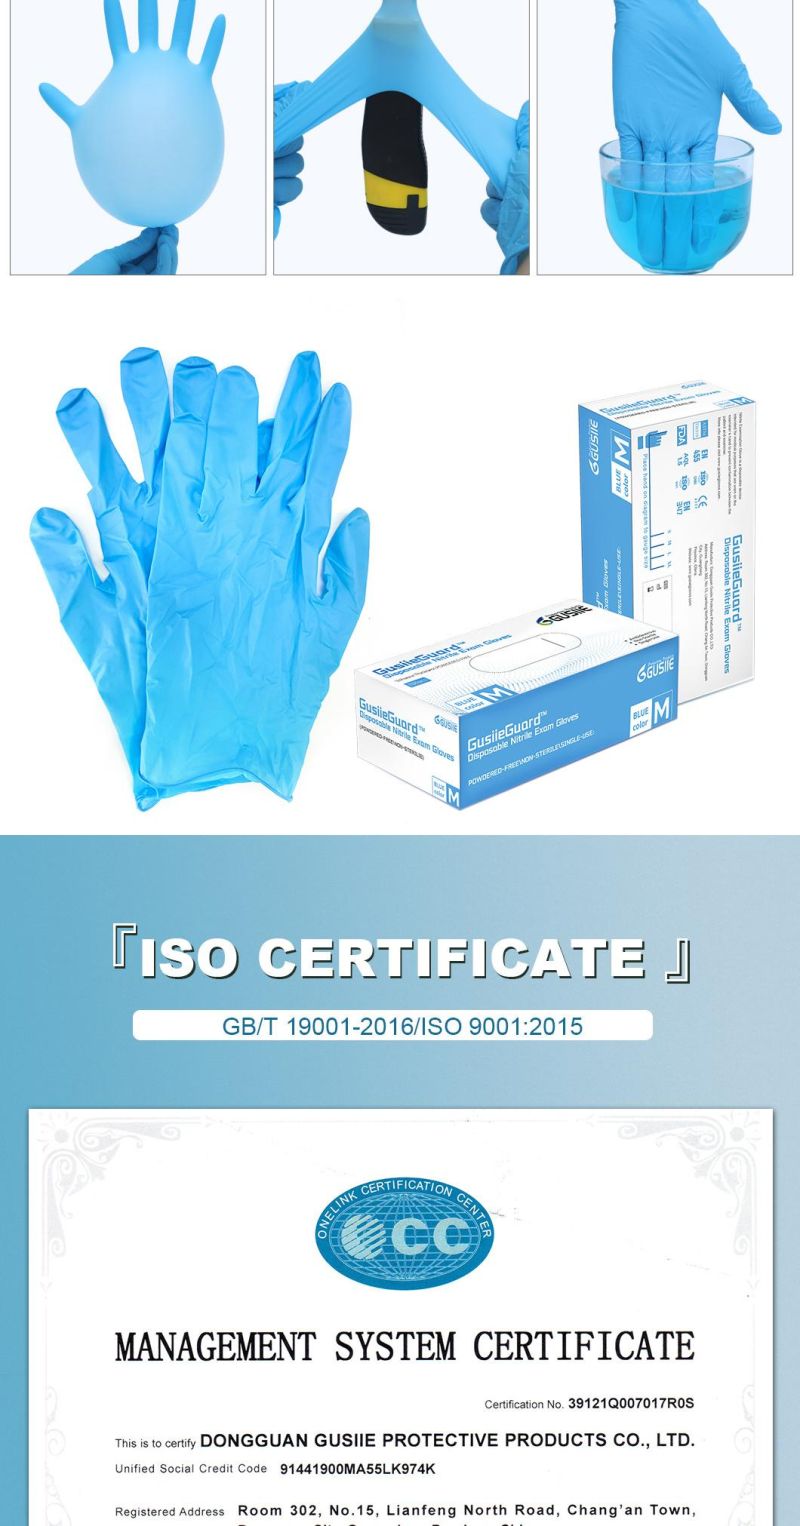 Blue Disposable Large Nitrile Medical Examination Gloves